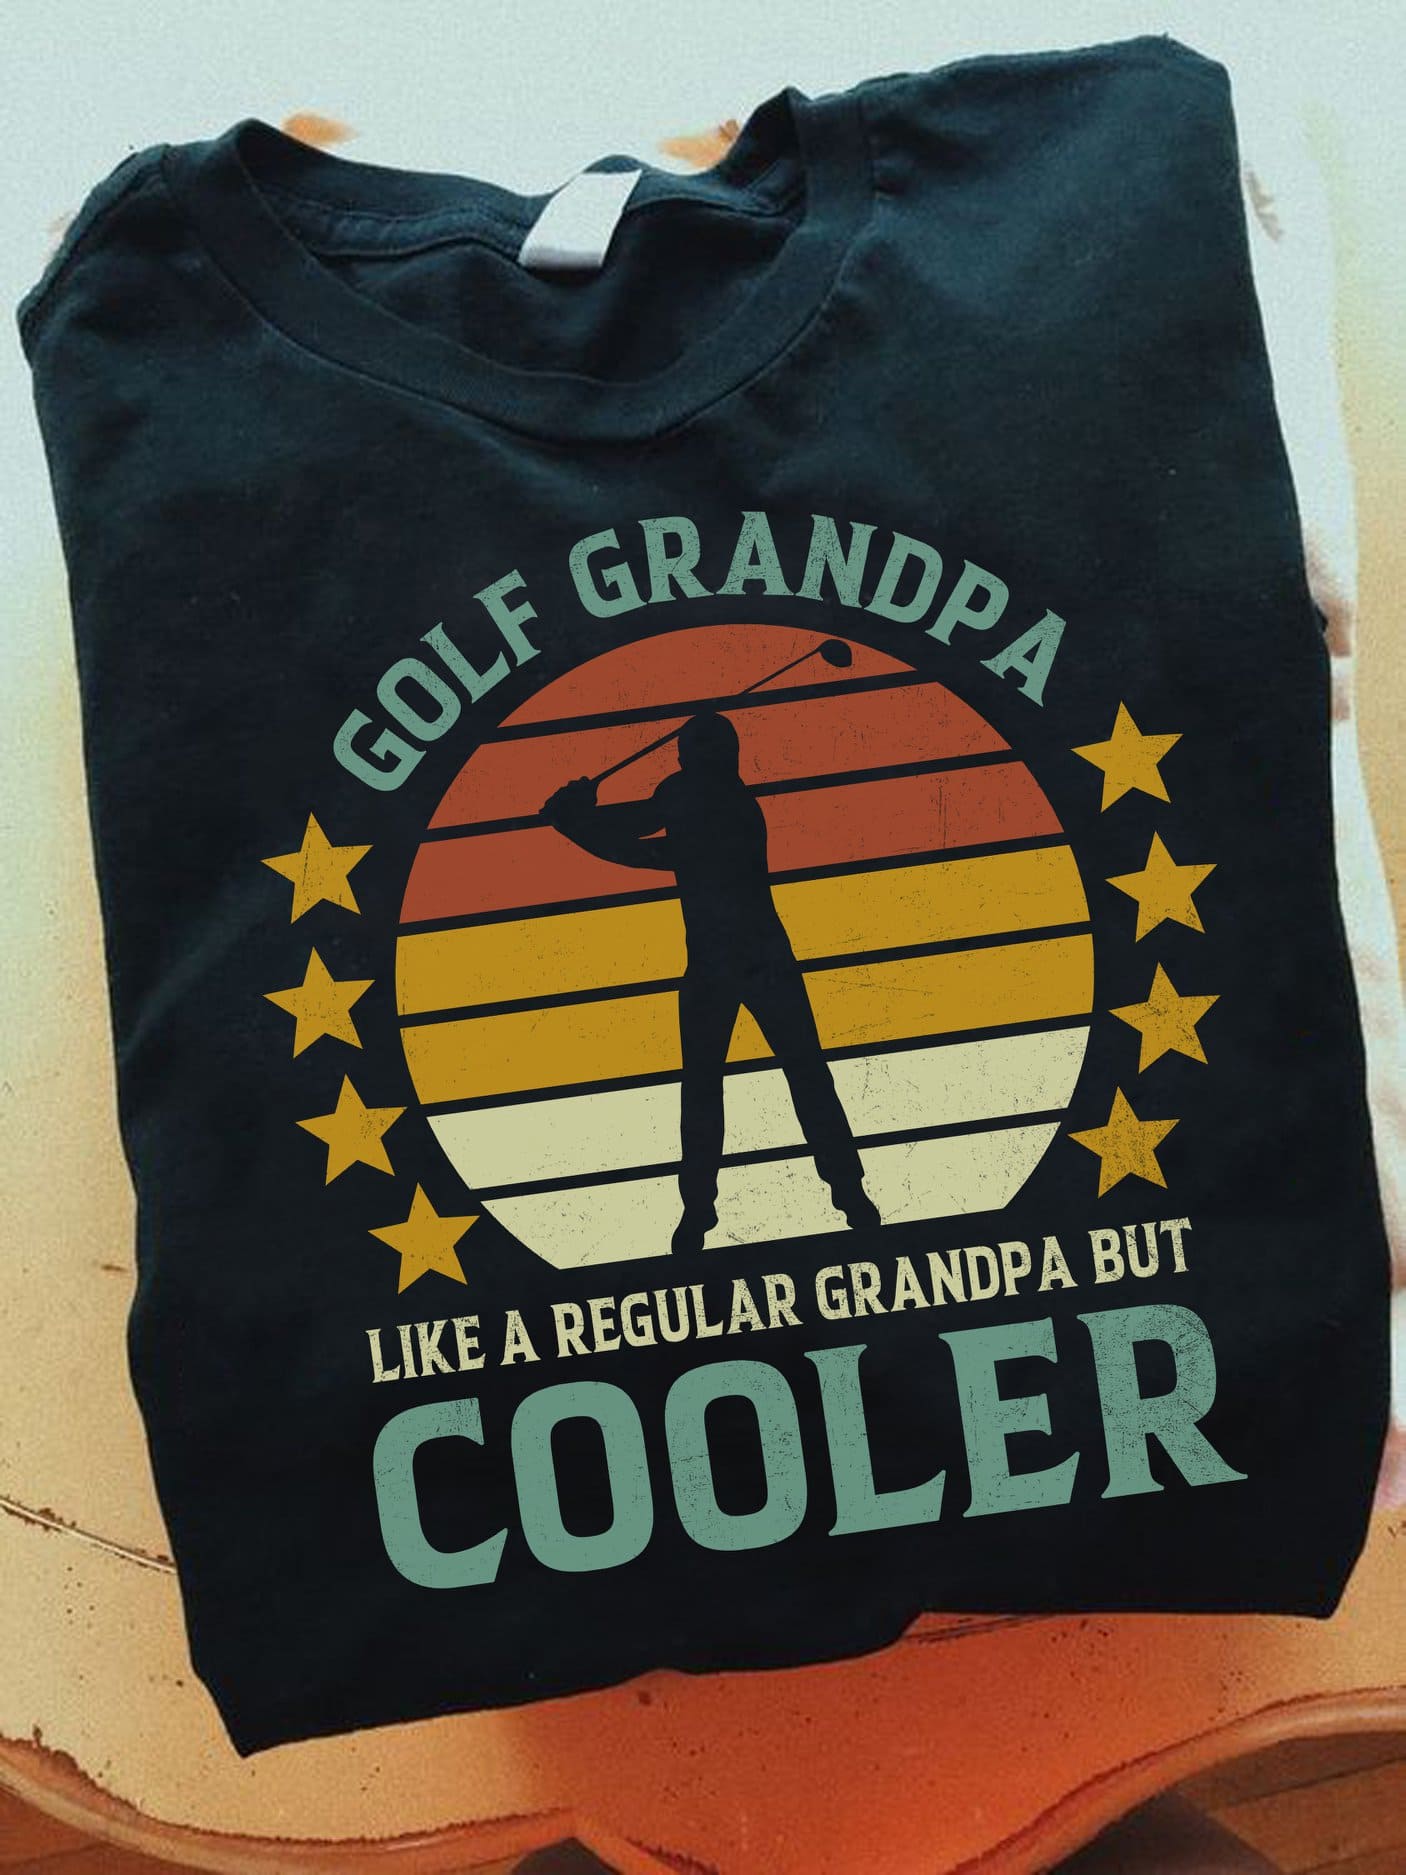 Golf grandpa like a regular grandpa but cooler - Gift for golfer, grandpa family T-shirt